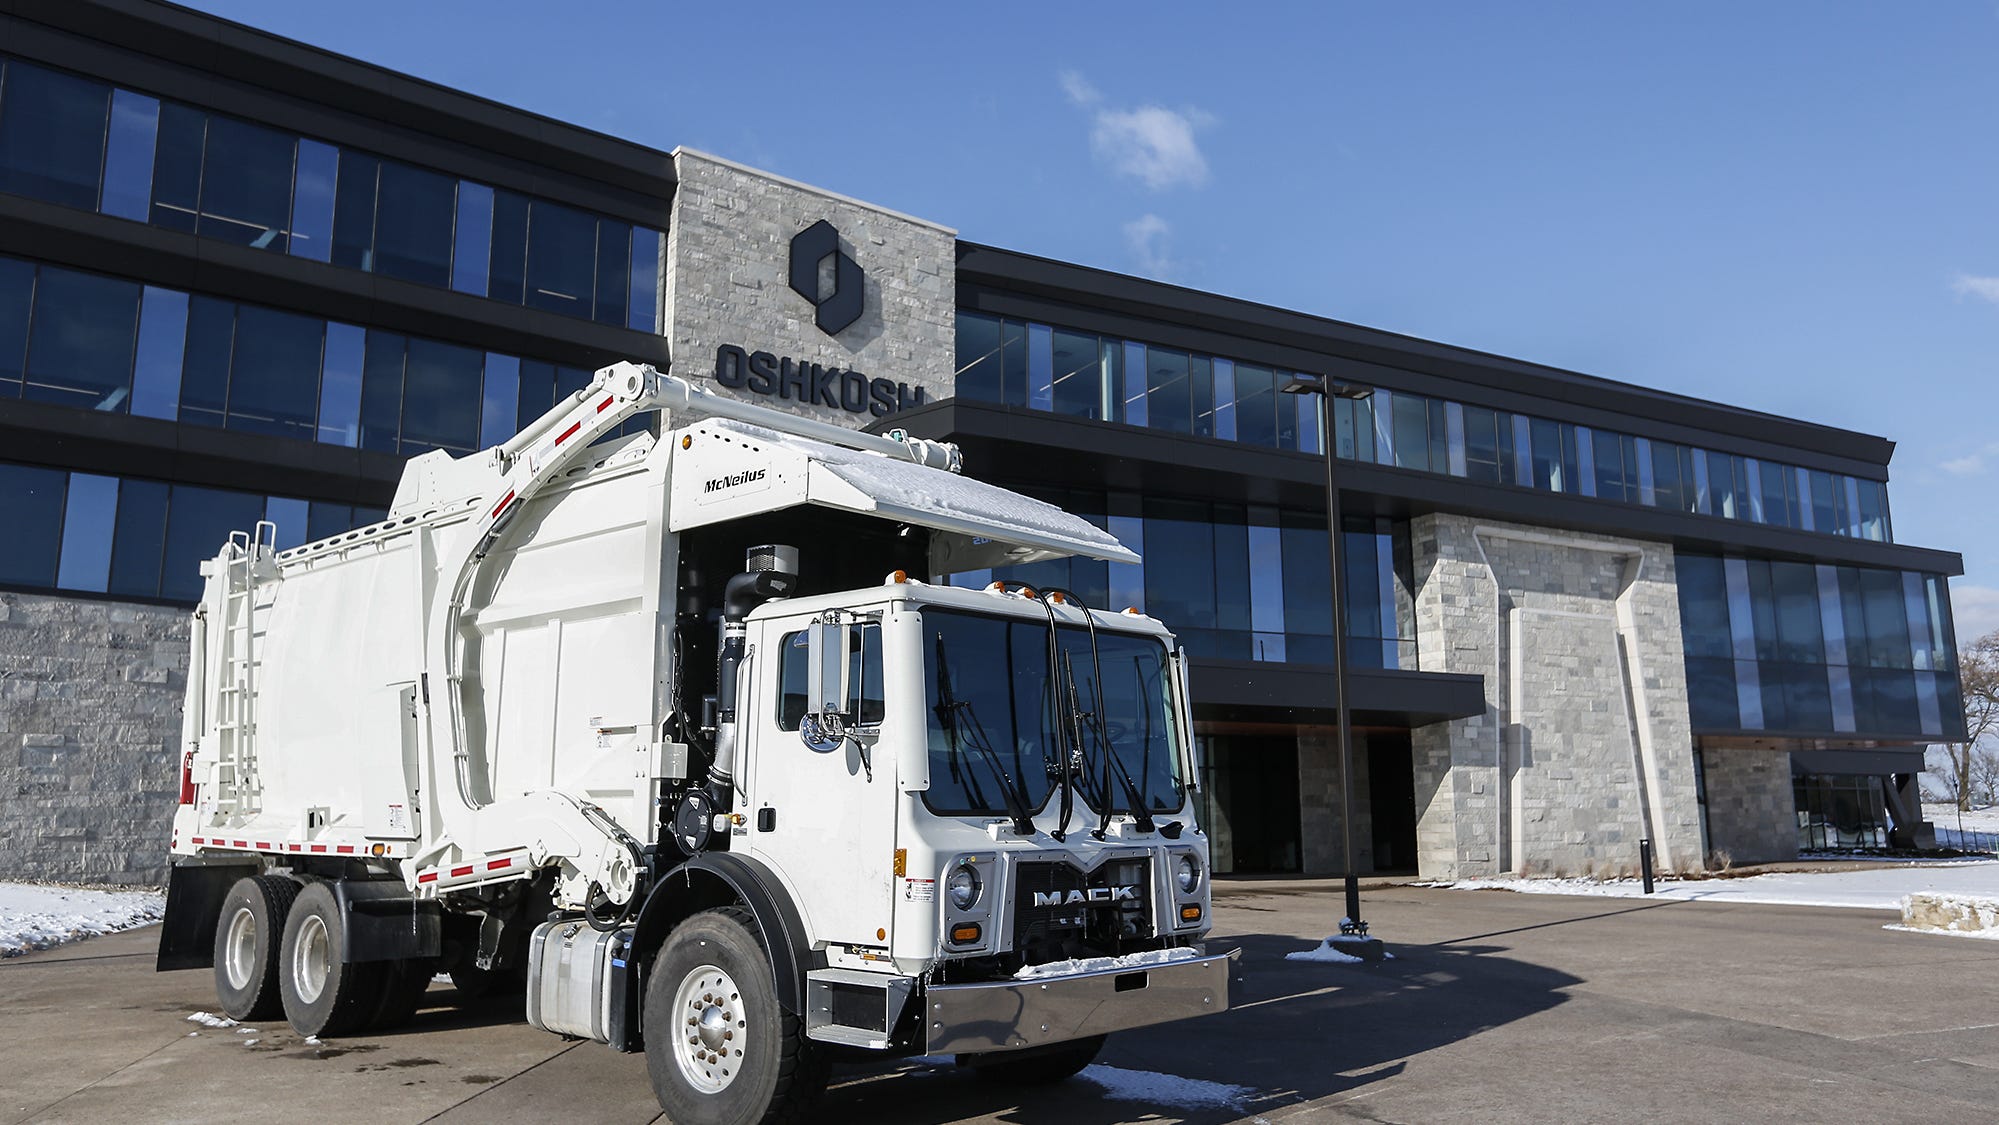 Wisconsin's Oshkosh Corp. moves into openconcept global headquarters